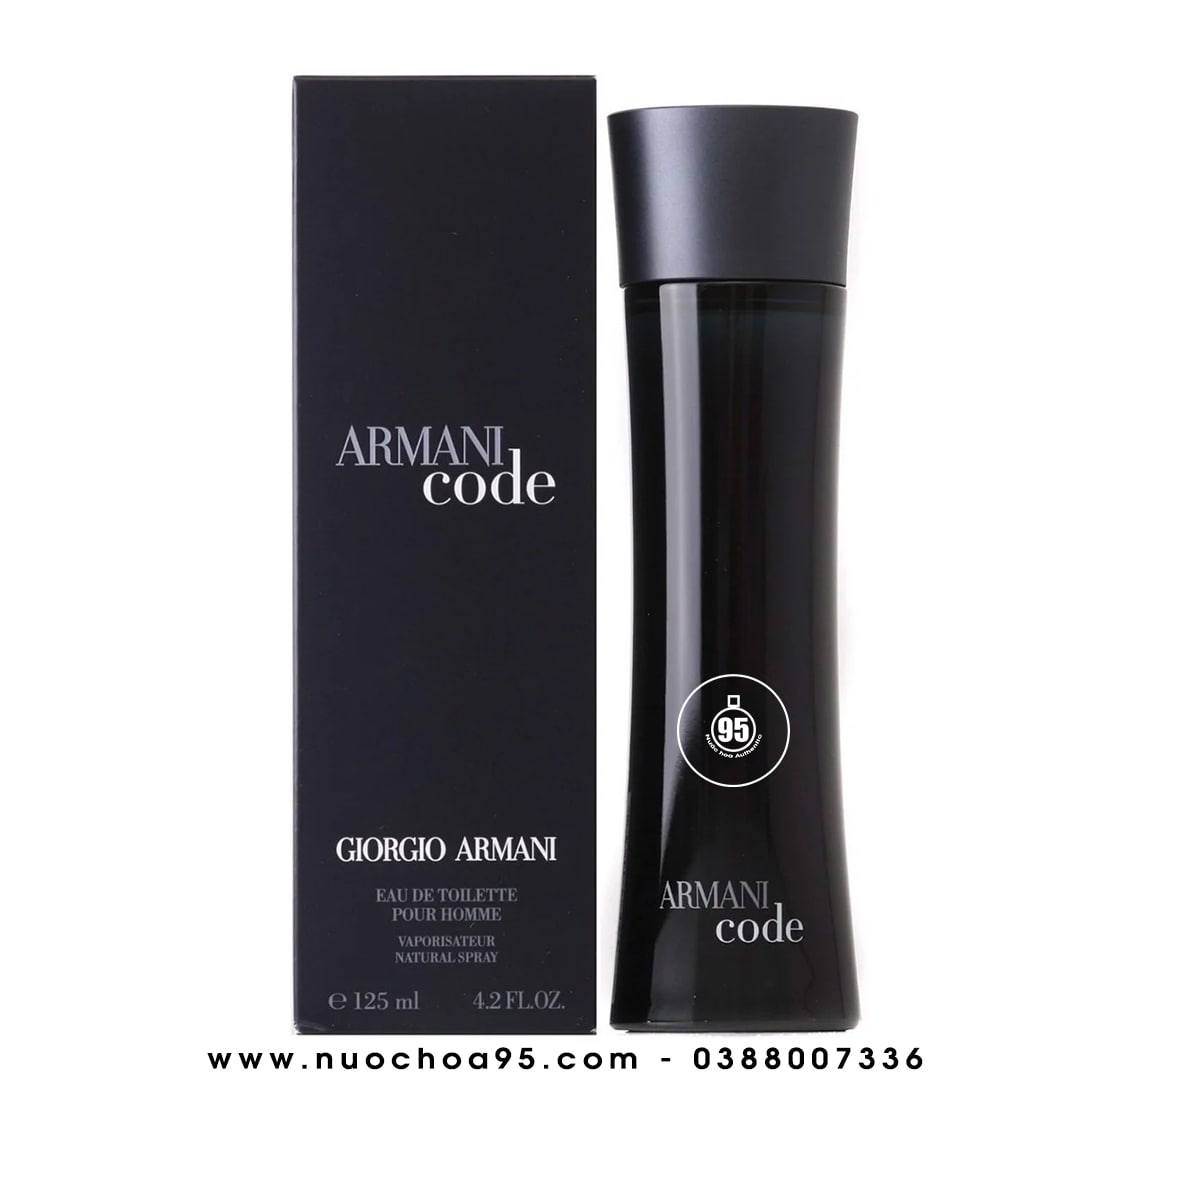 Nước hoa Giorgio Armani Armani Code Pour Homme EDT